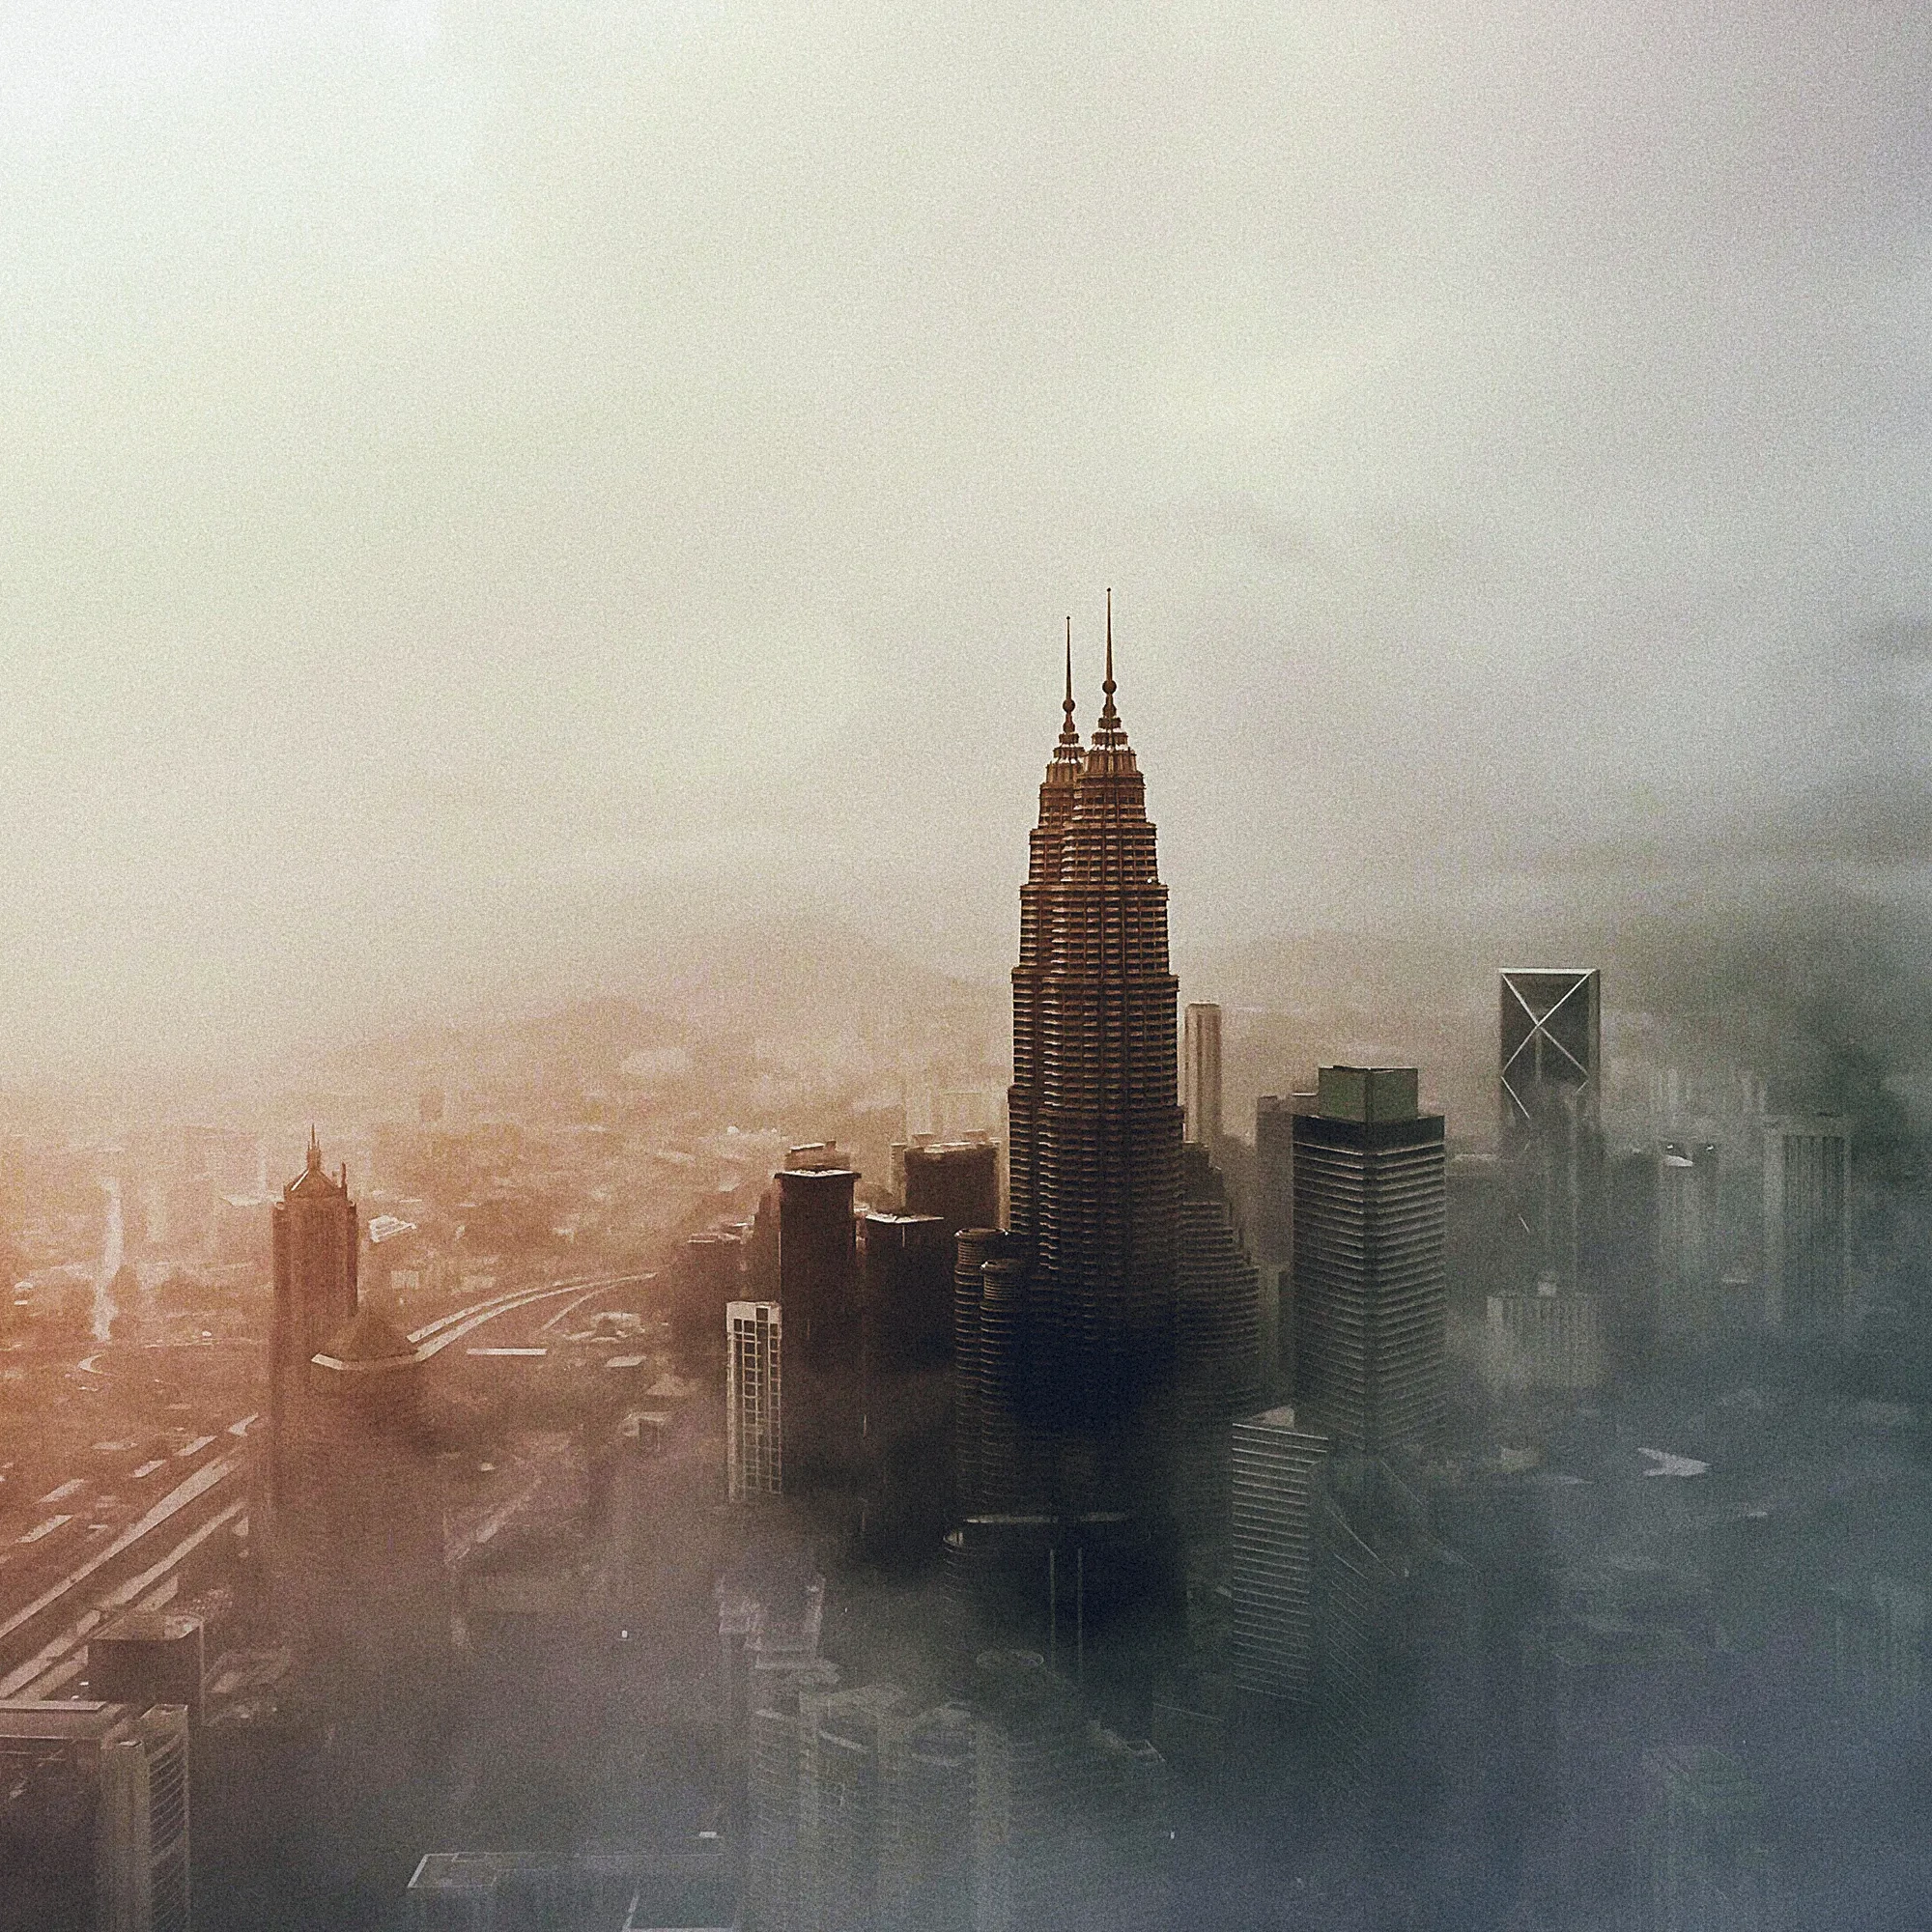 Malaysia's skyline featuring Kuala Lumpur Twin Towers